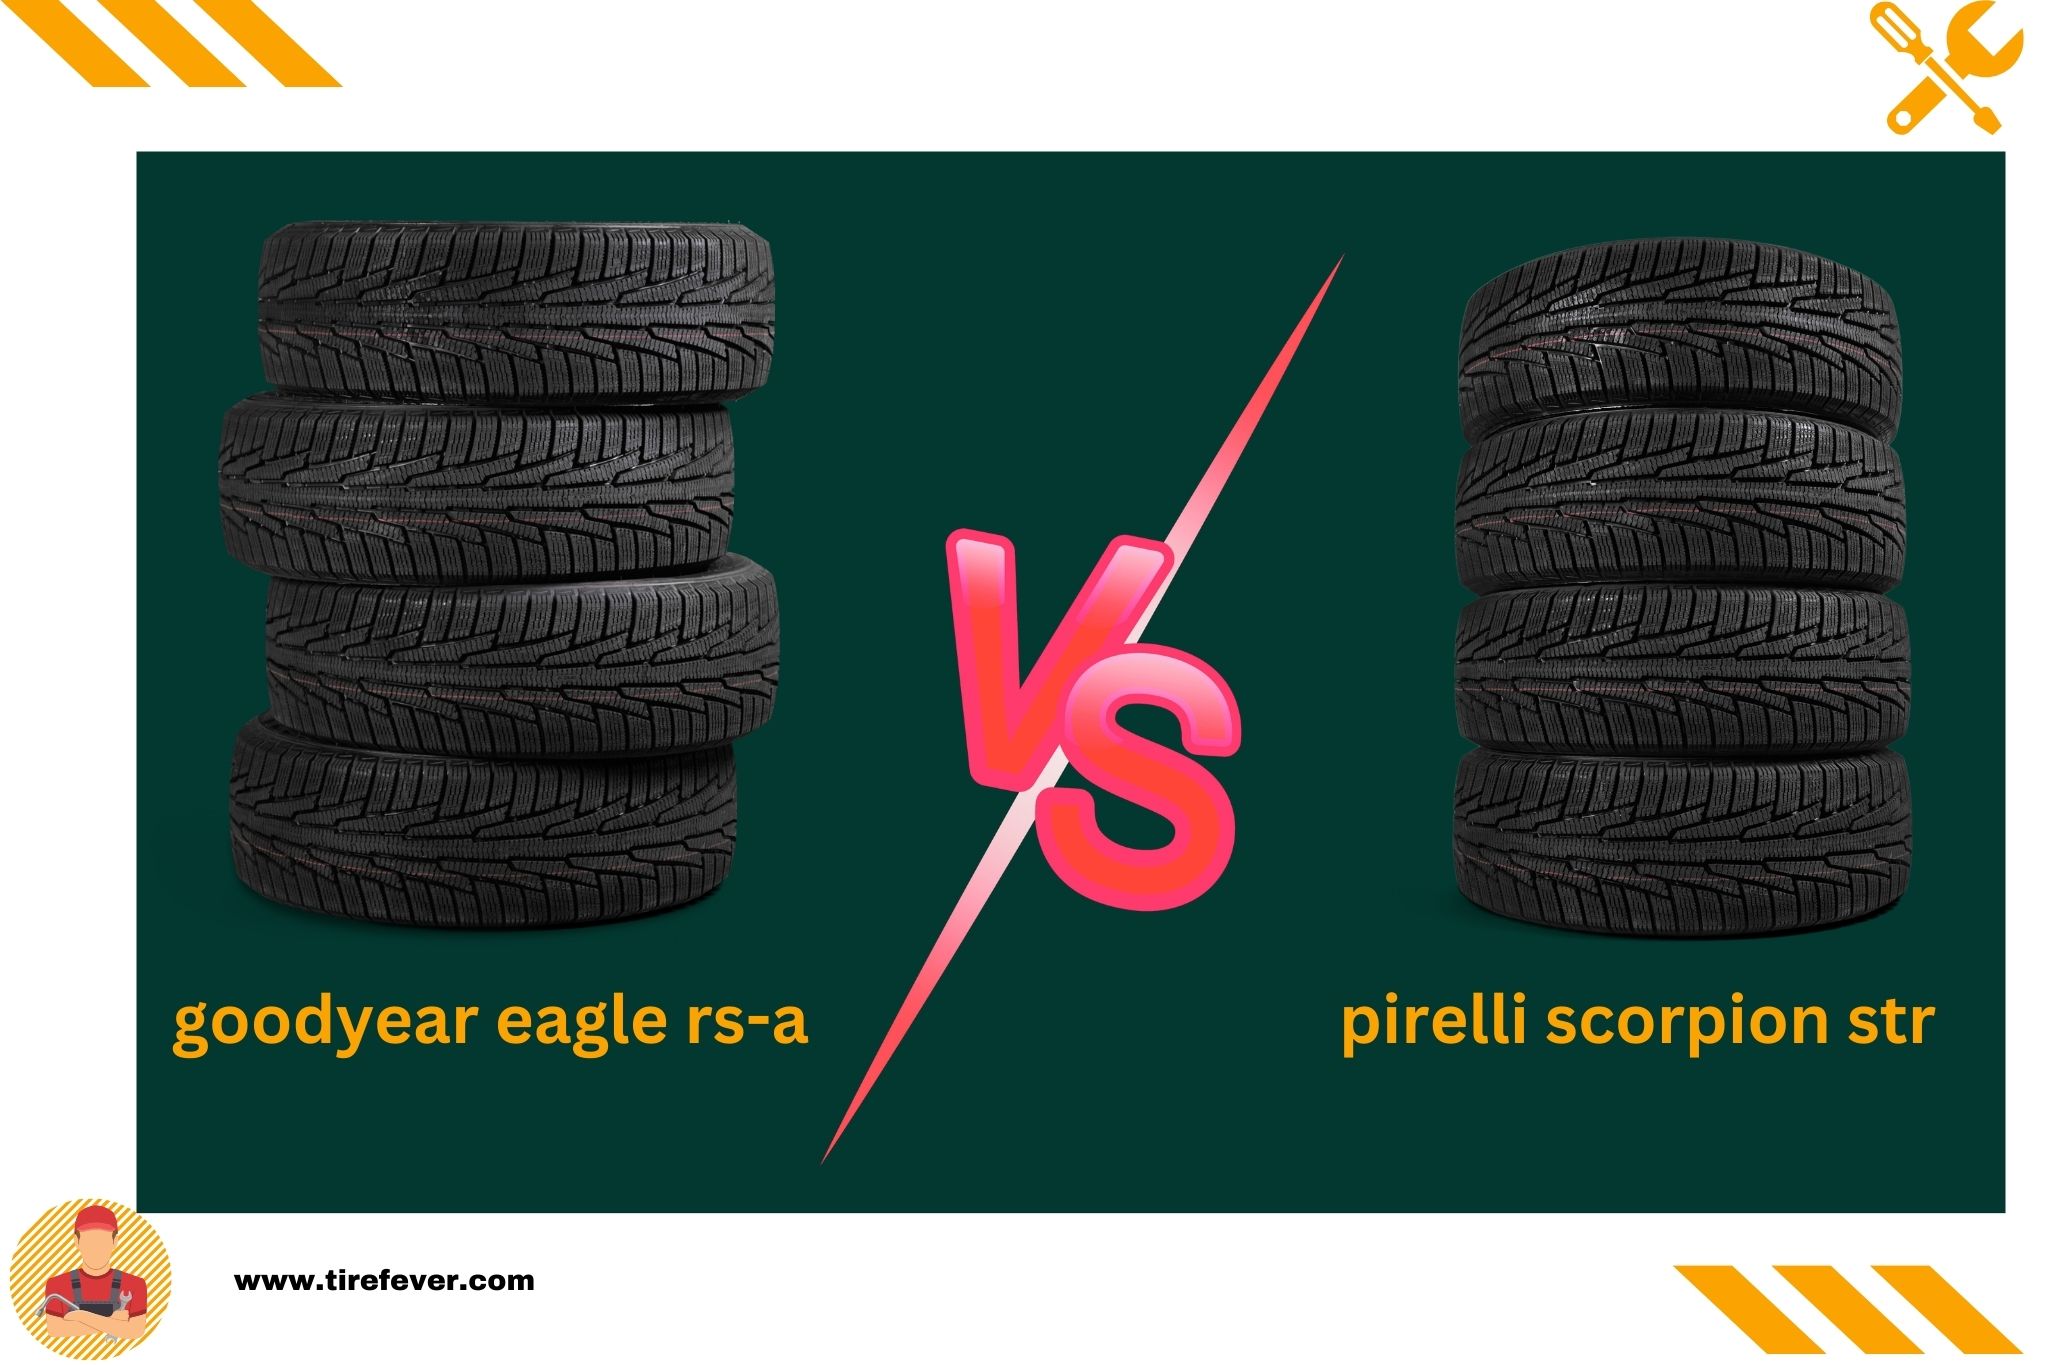 goodyear eagle rs-a vs pirelli scorpion str